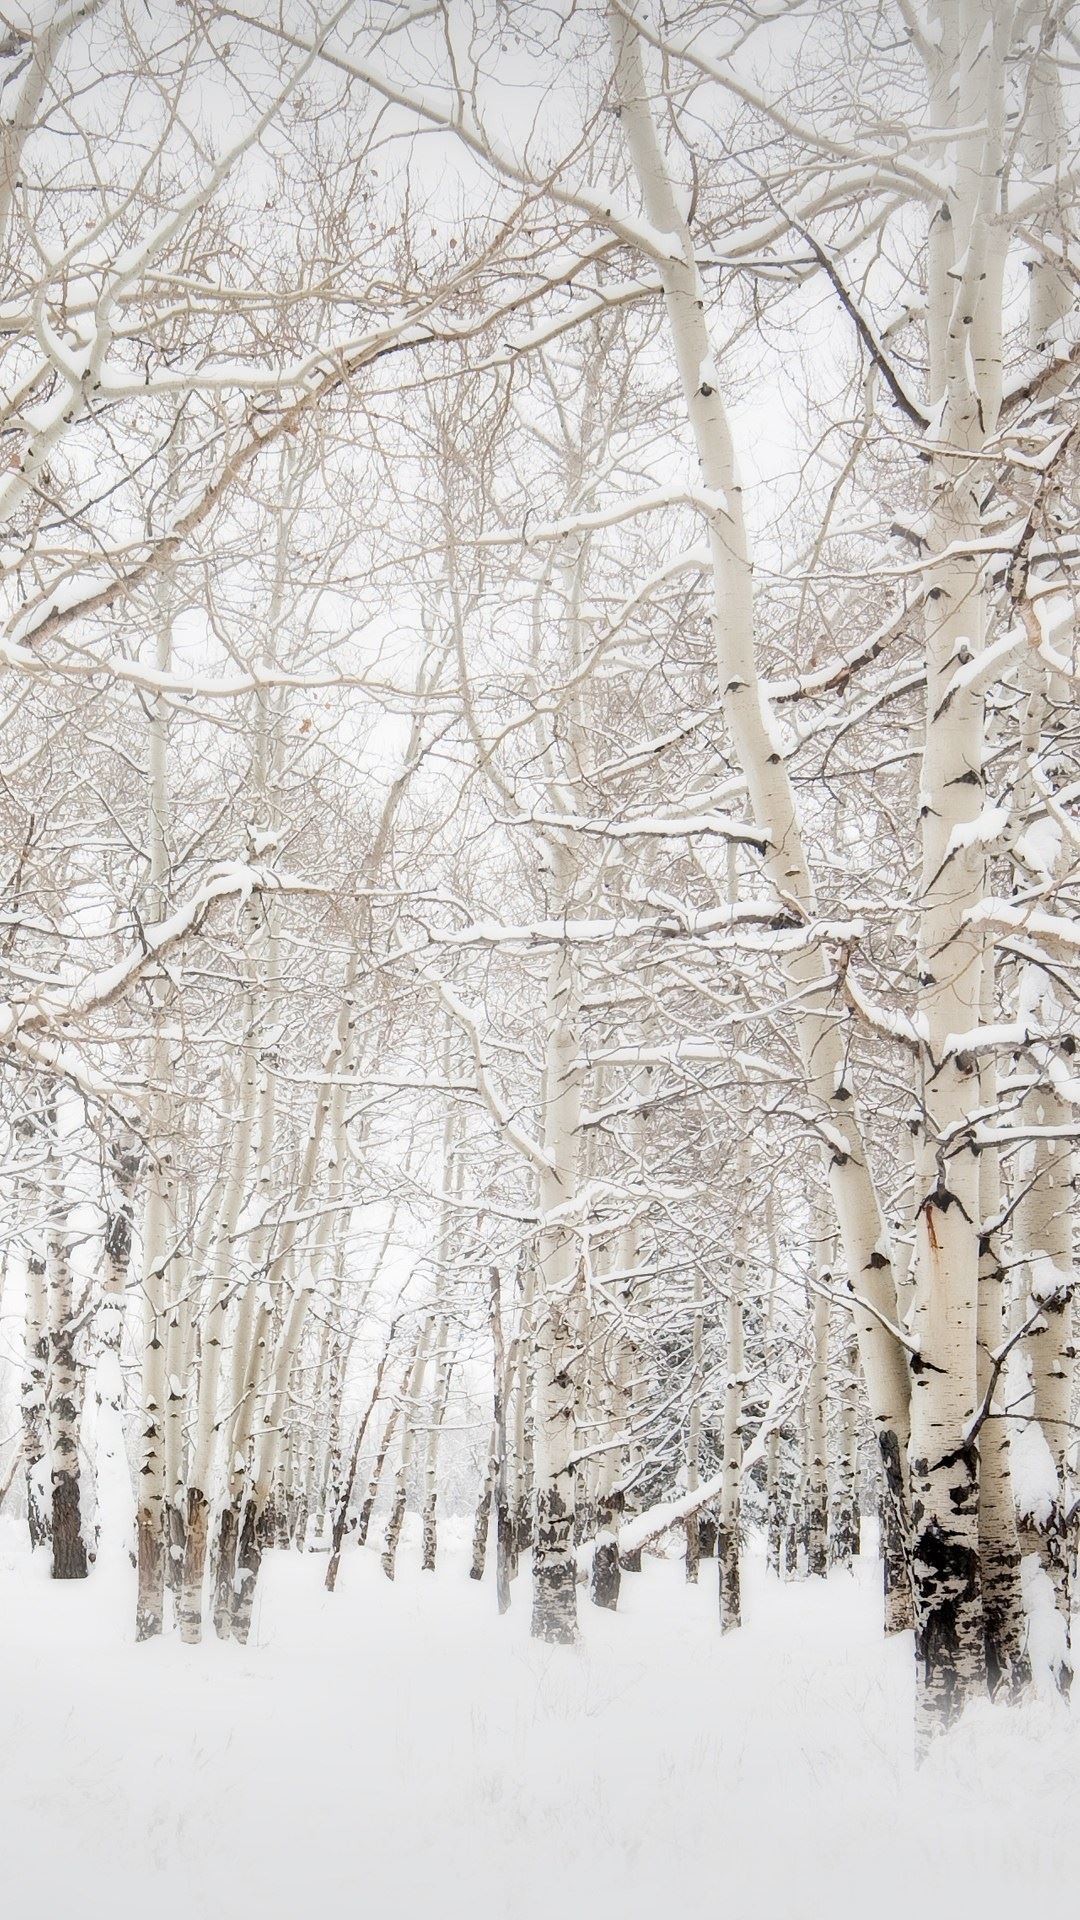 1080x1920 Birch Trees Winter Landscape iPhone 6 Plus HD Wallpaper